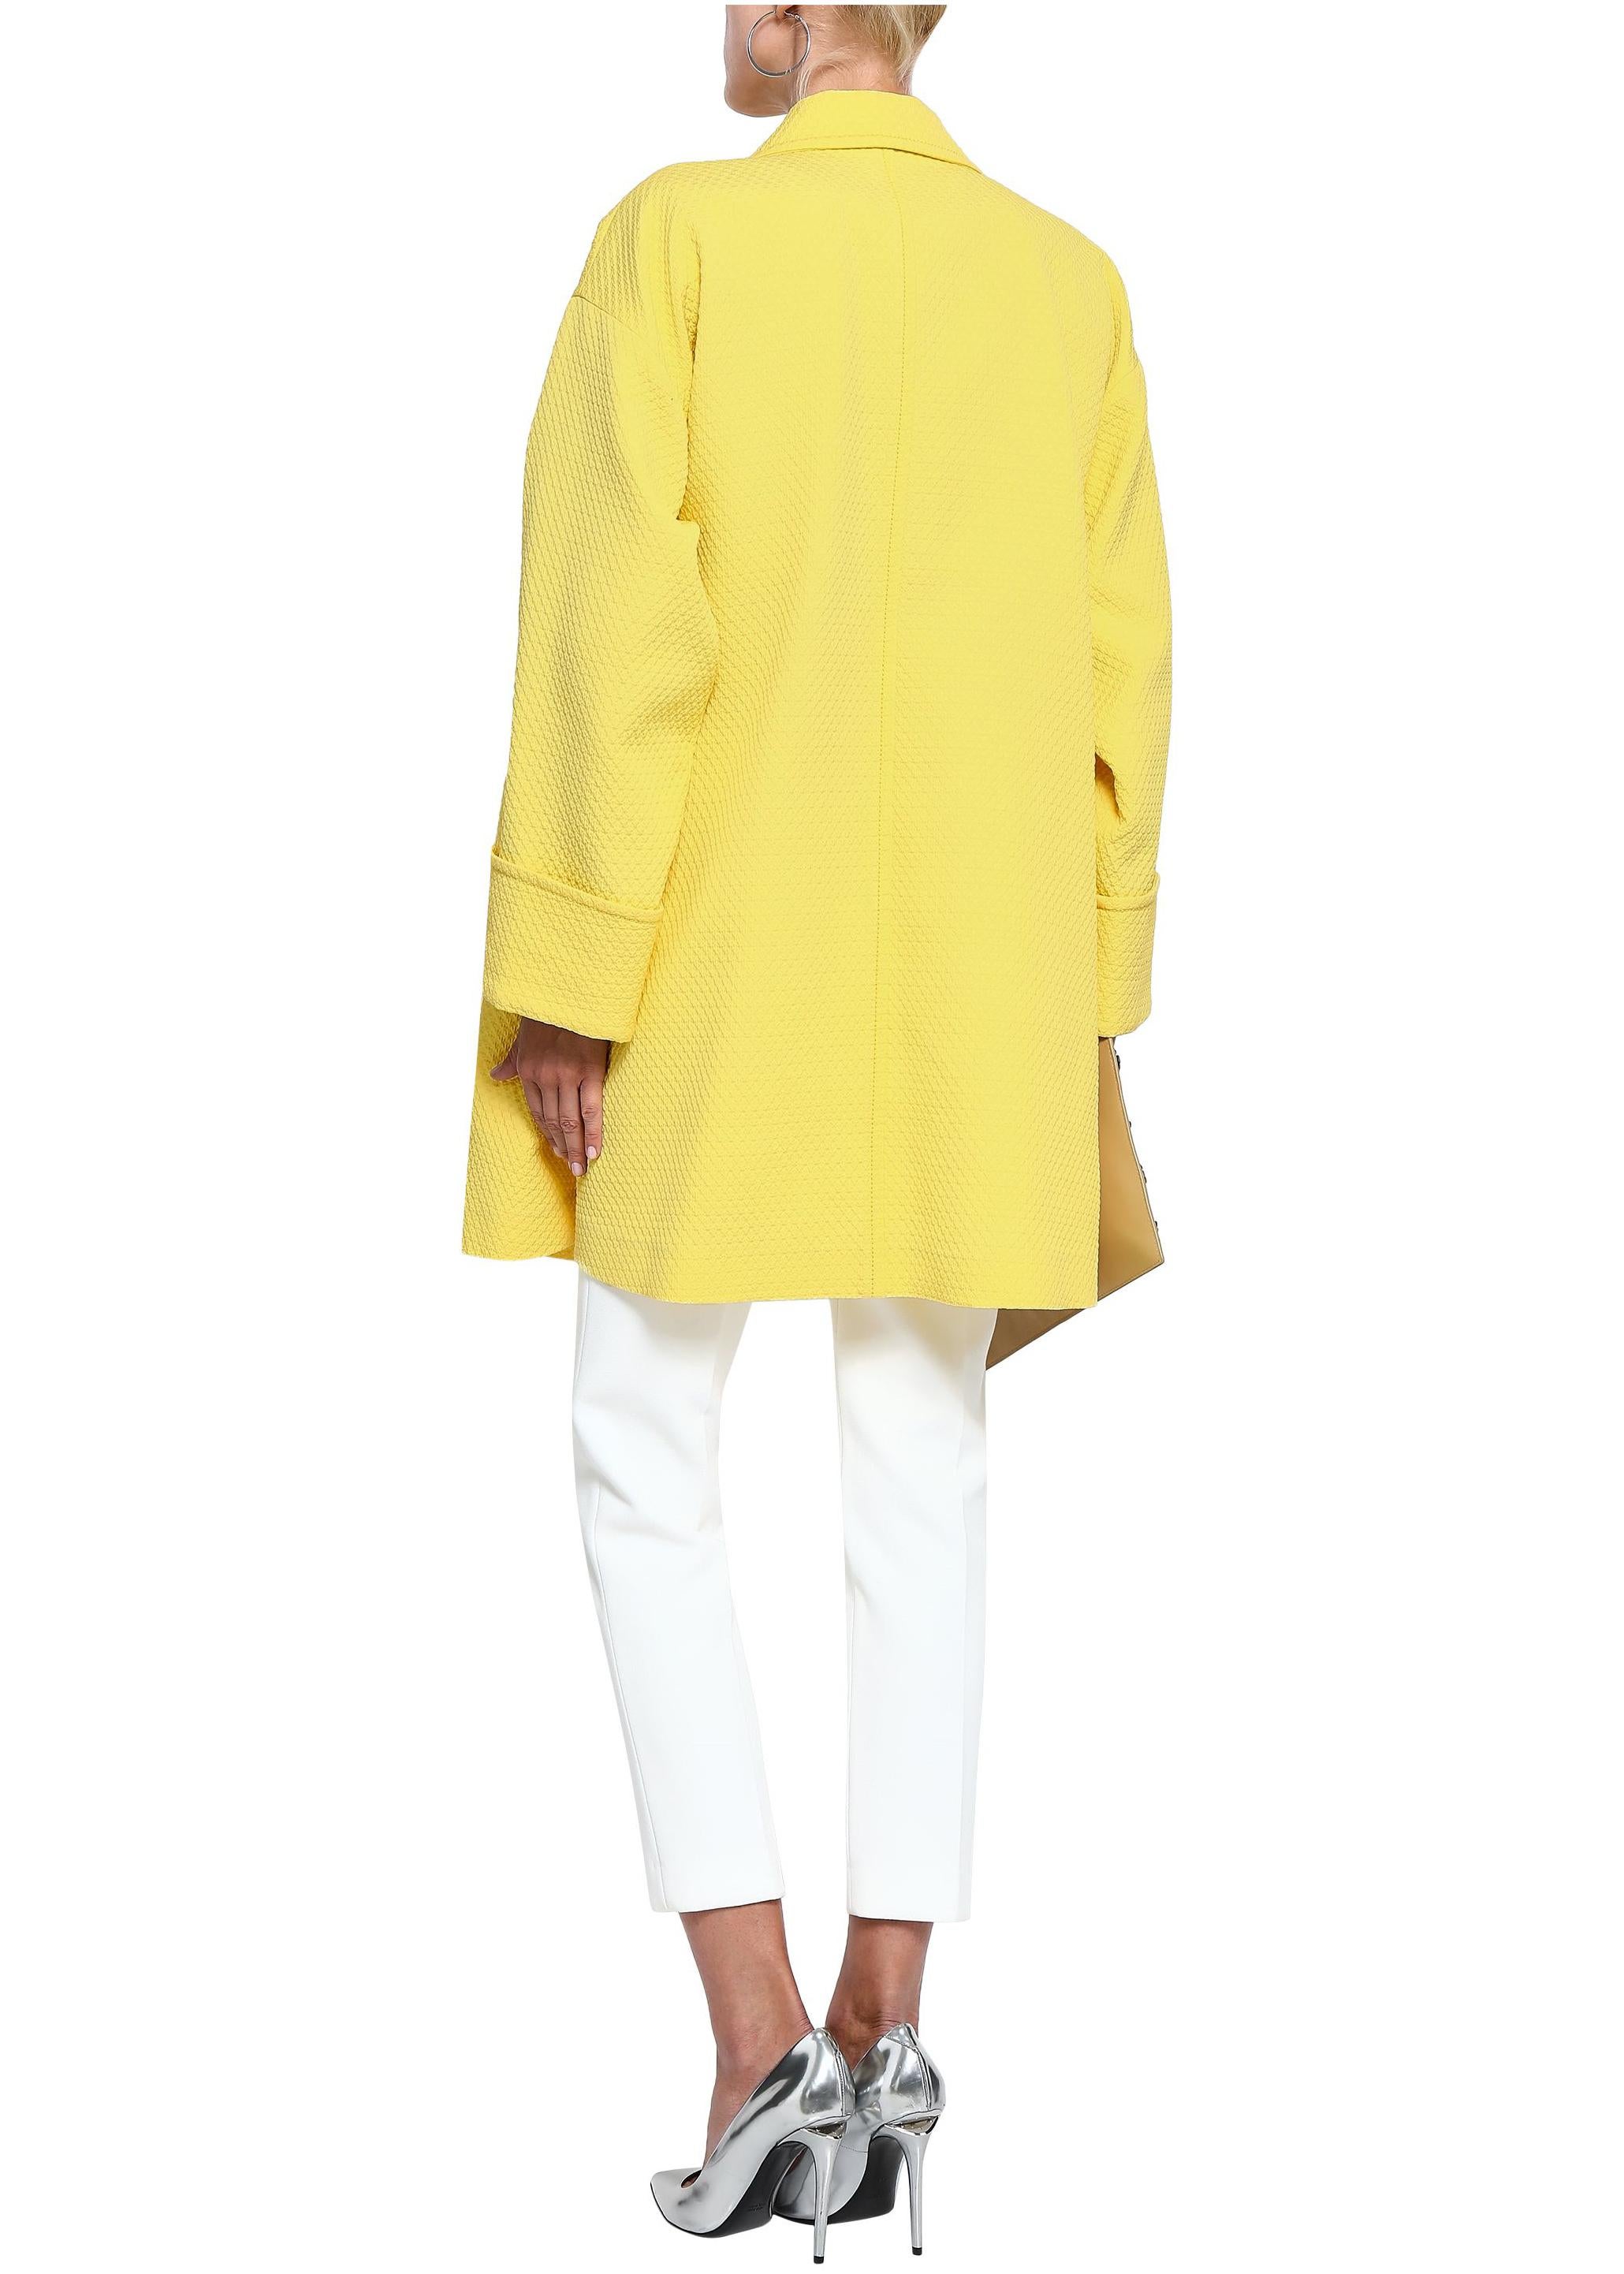 Yellow Emilio Pucci yellow matelasse oversized coat Size M